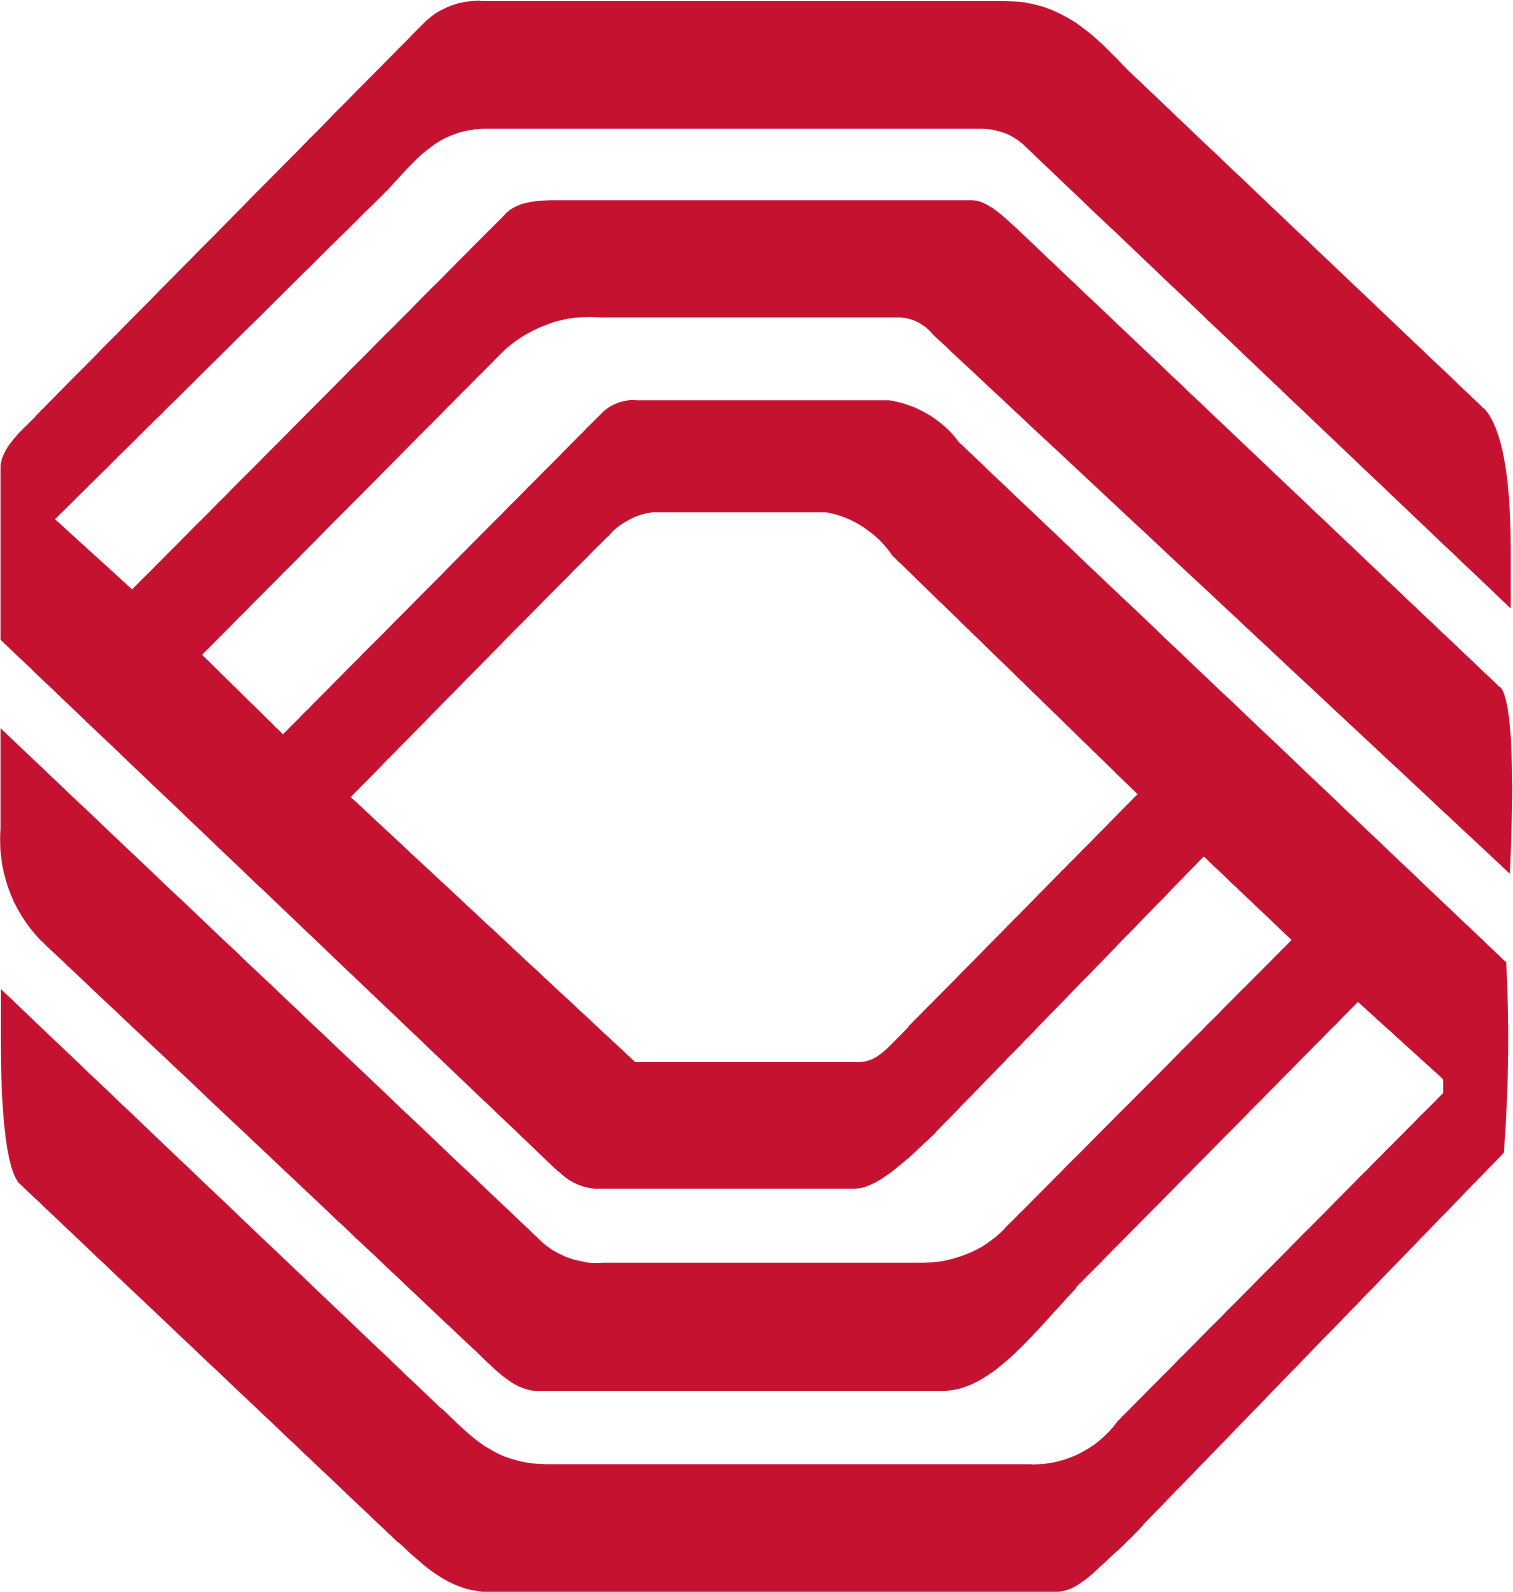 BOK Financial logo (PNG transparent)